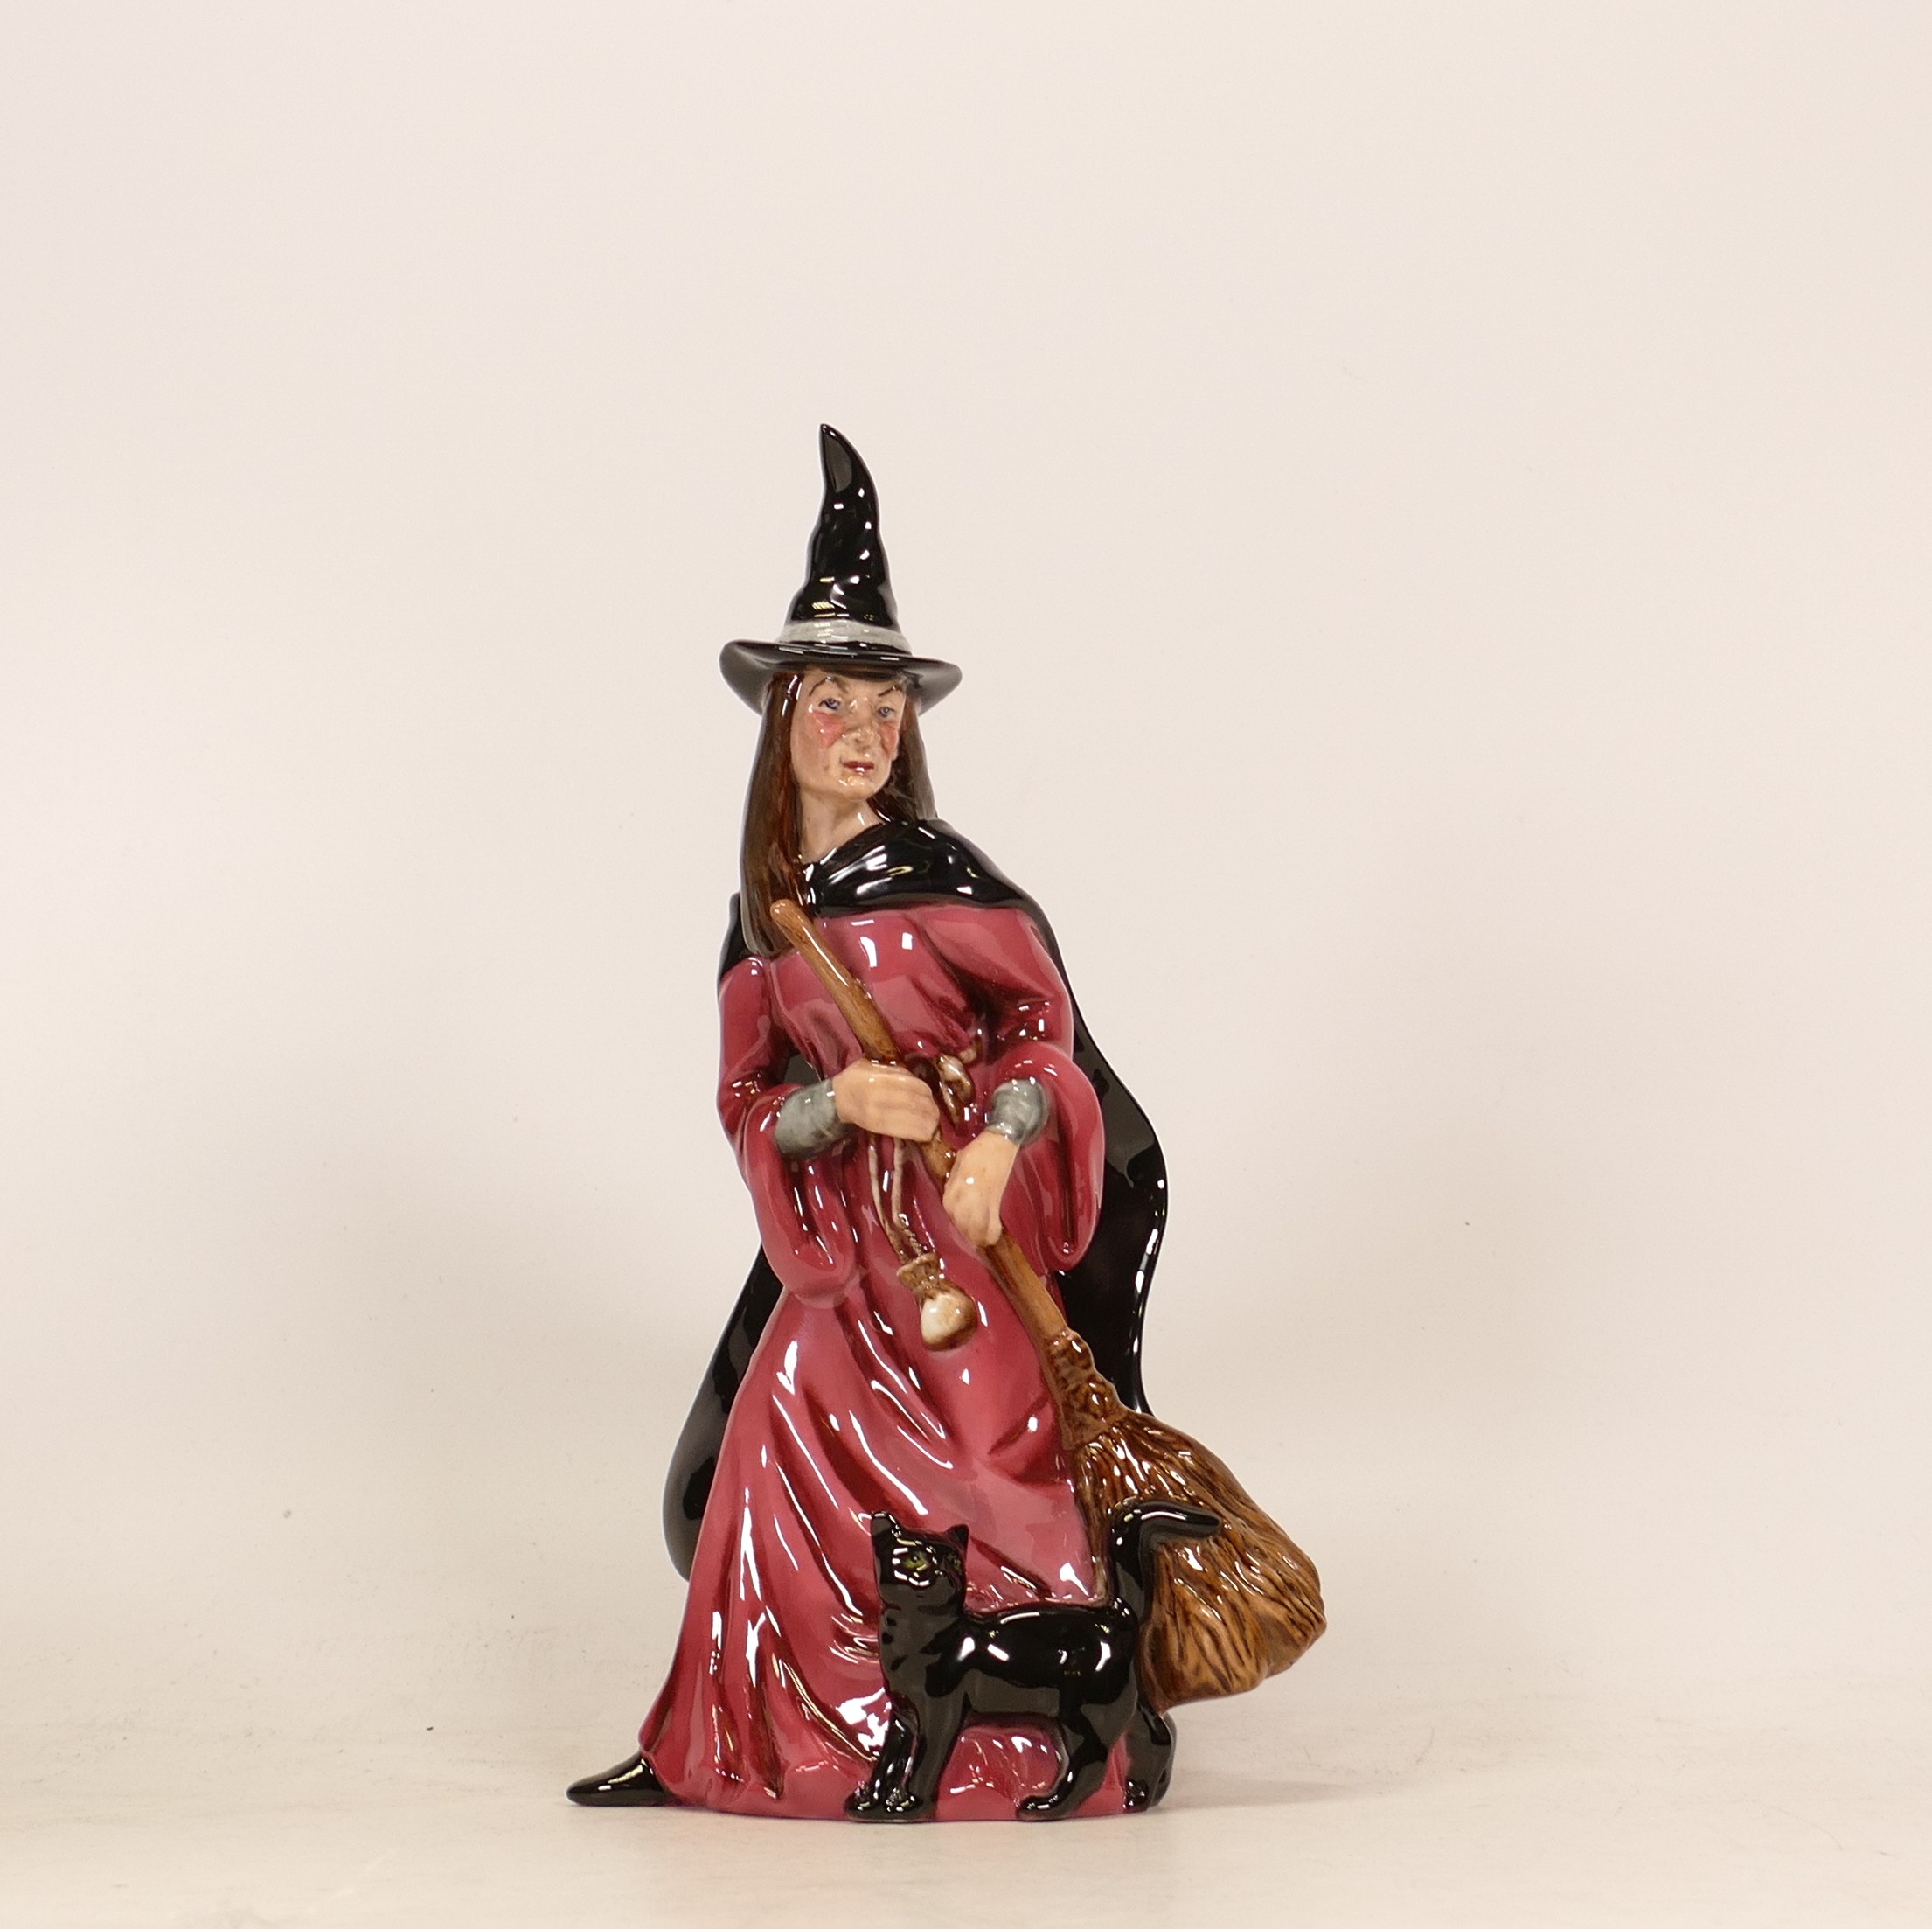 Royal Doulton Classics figure Witch HN4444